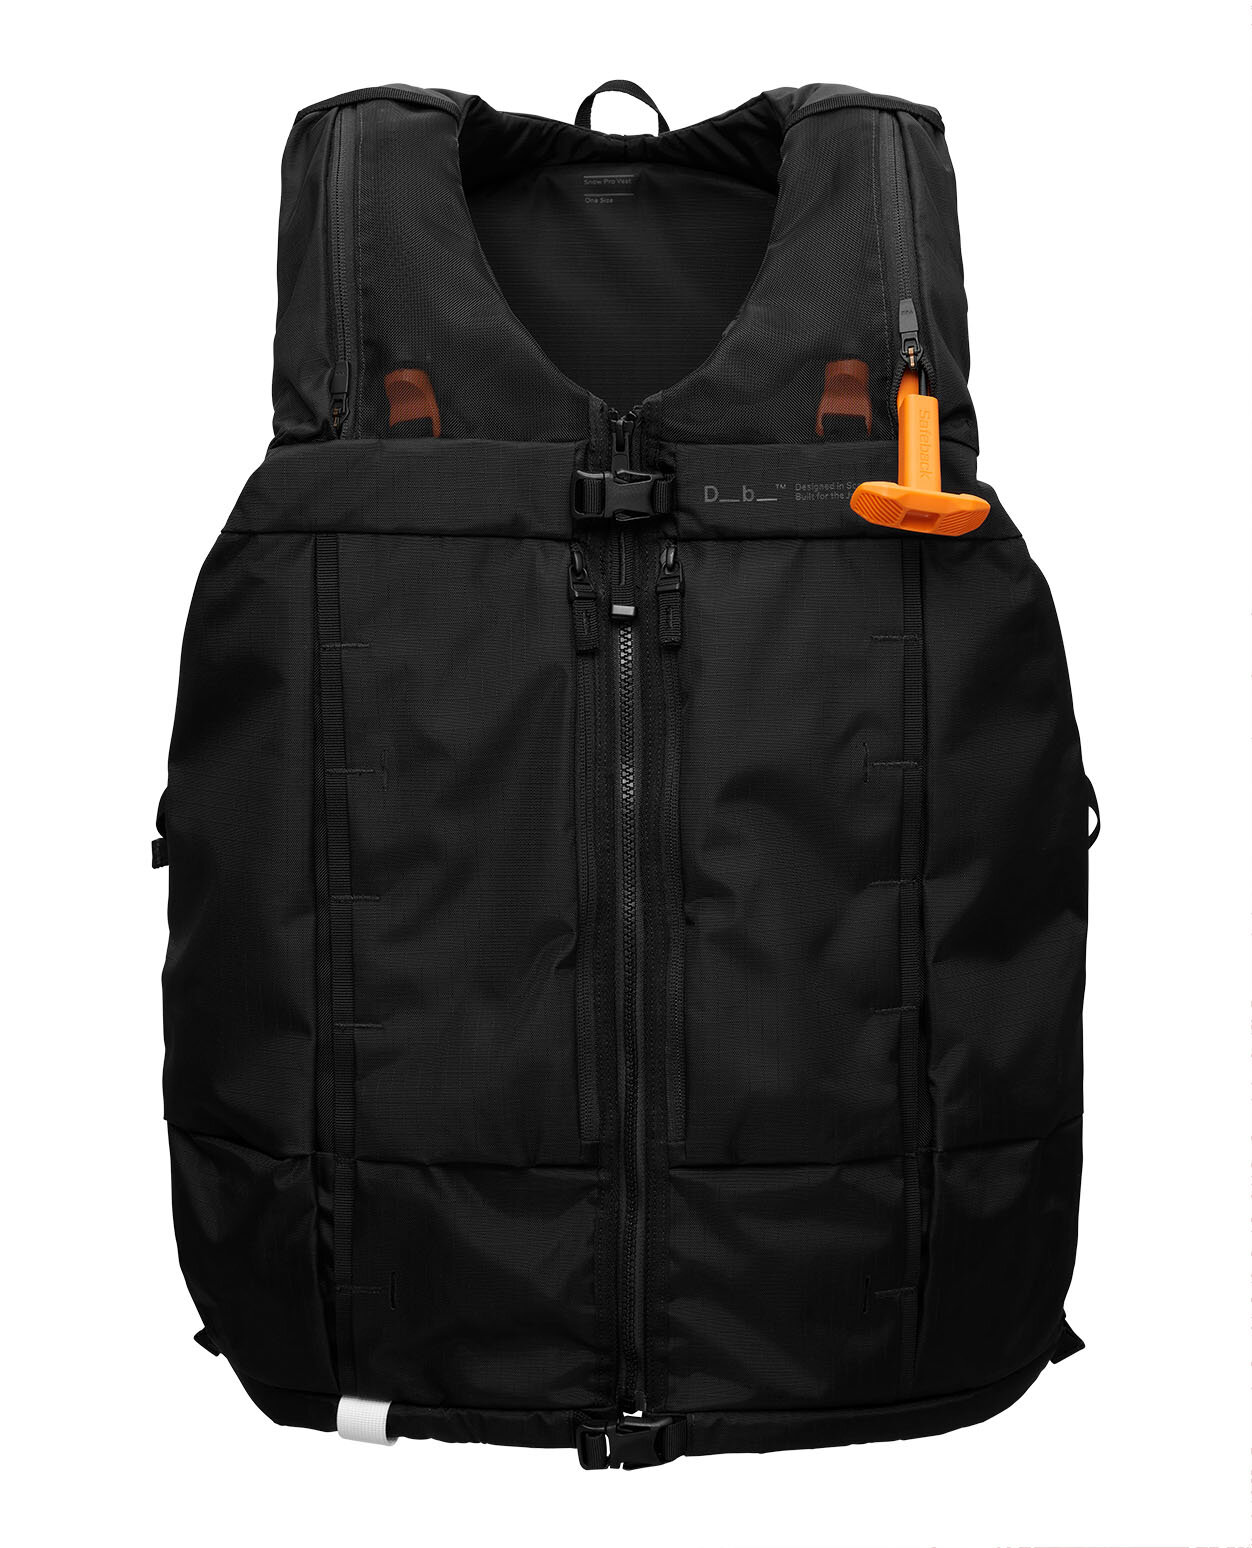 D_b_ Snow Pro Vest 8L x Safeback Black Out